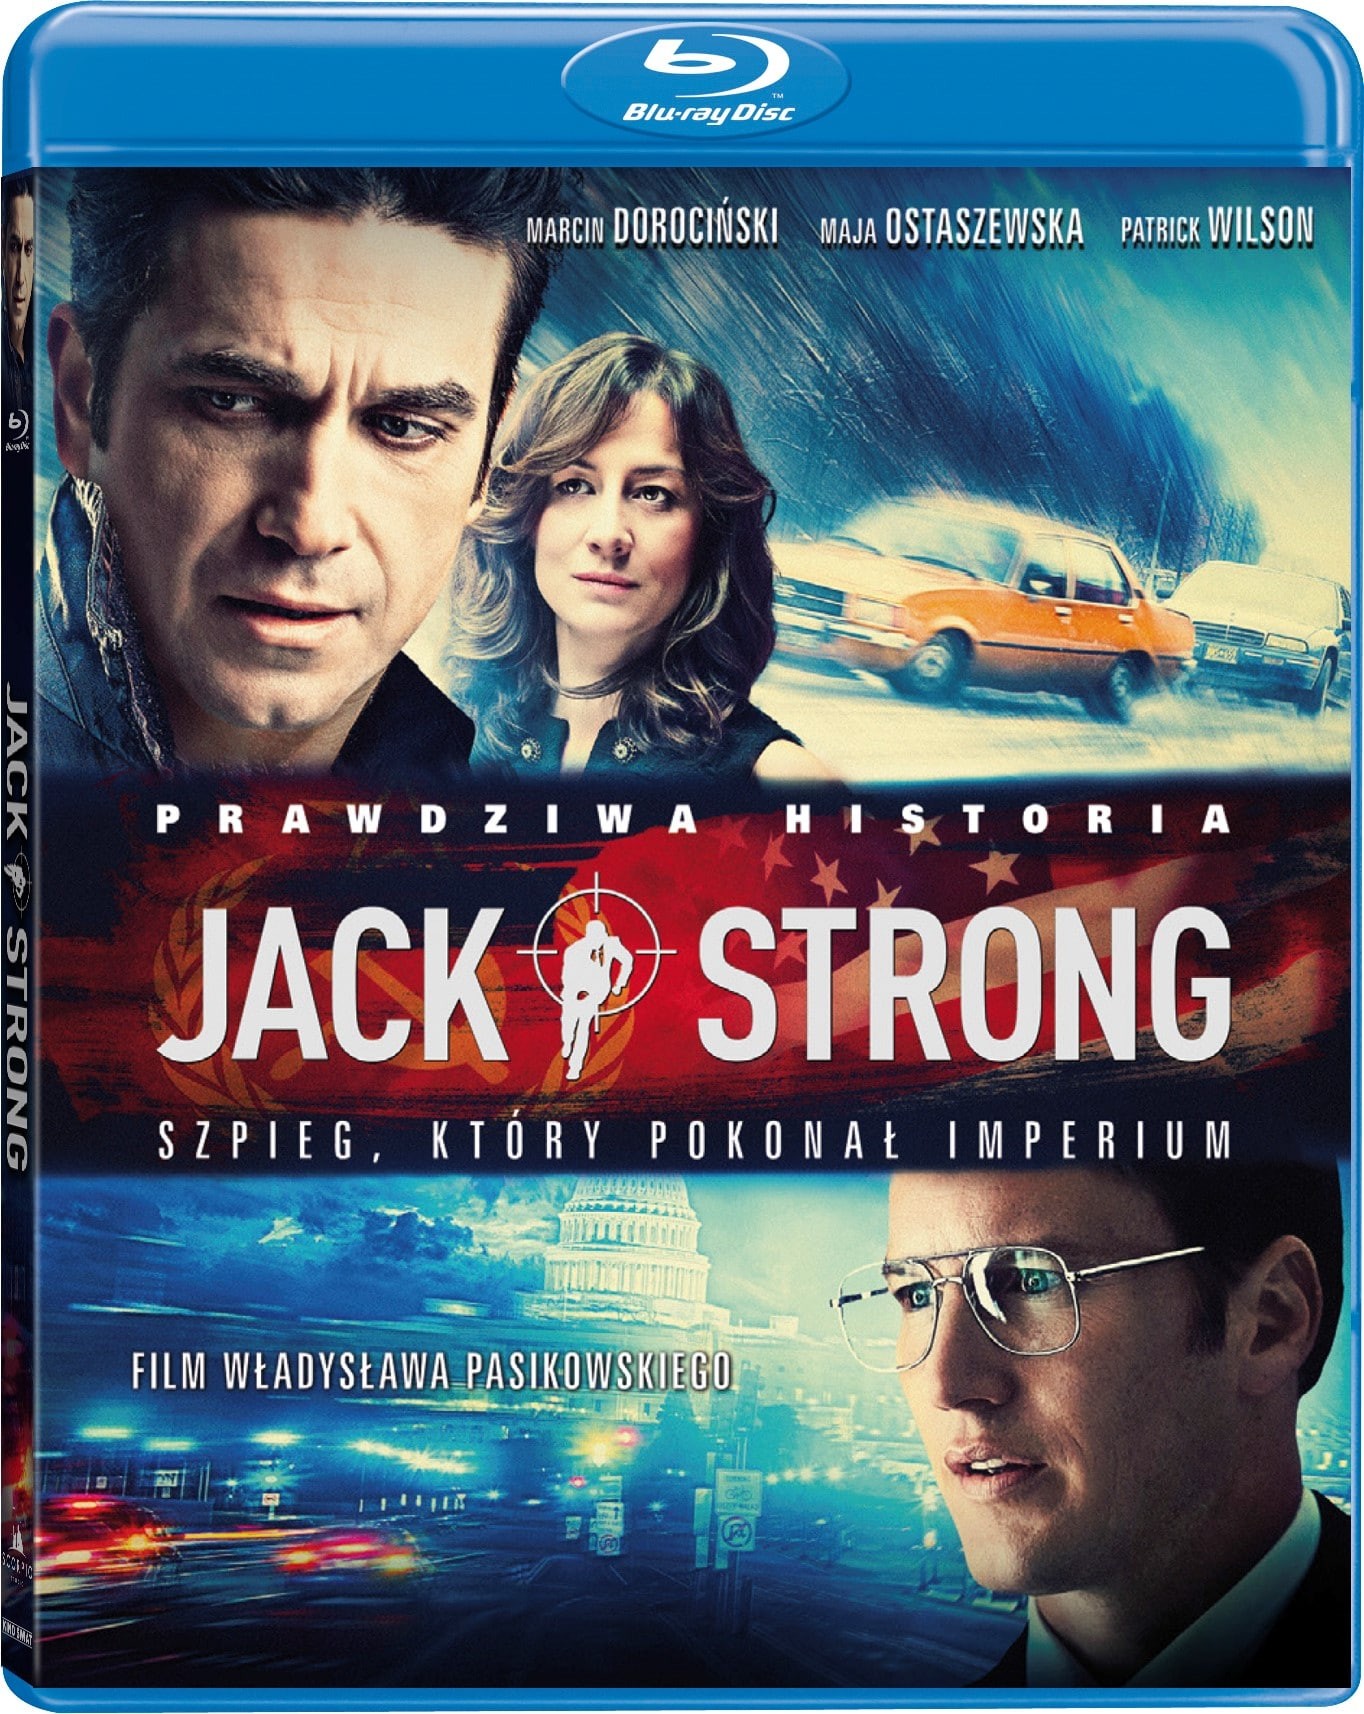 Jack-Strong_3D-BD-min.jpg